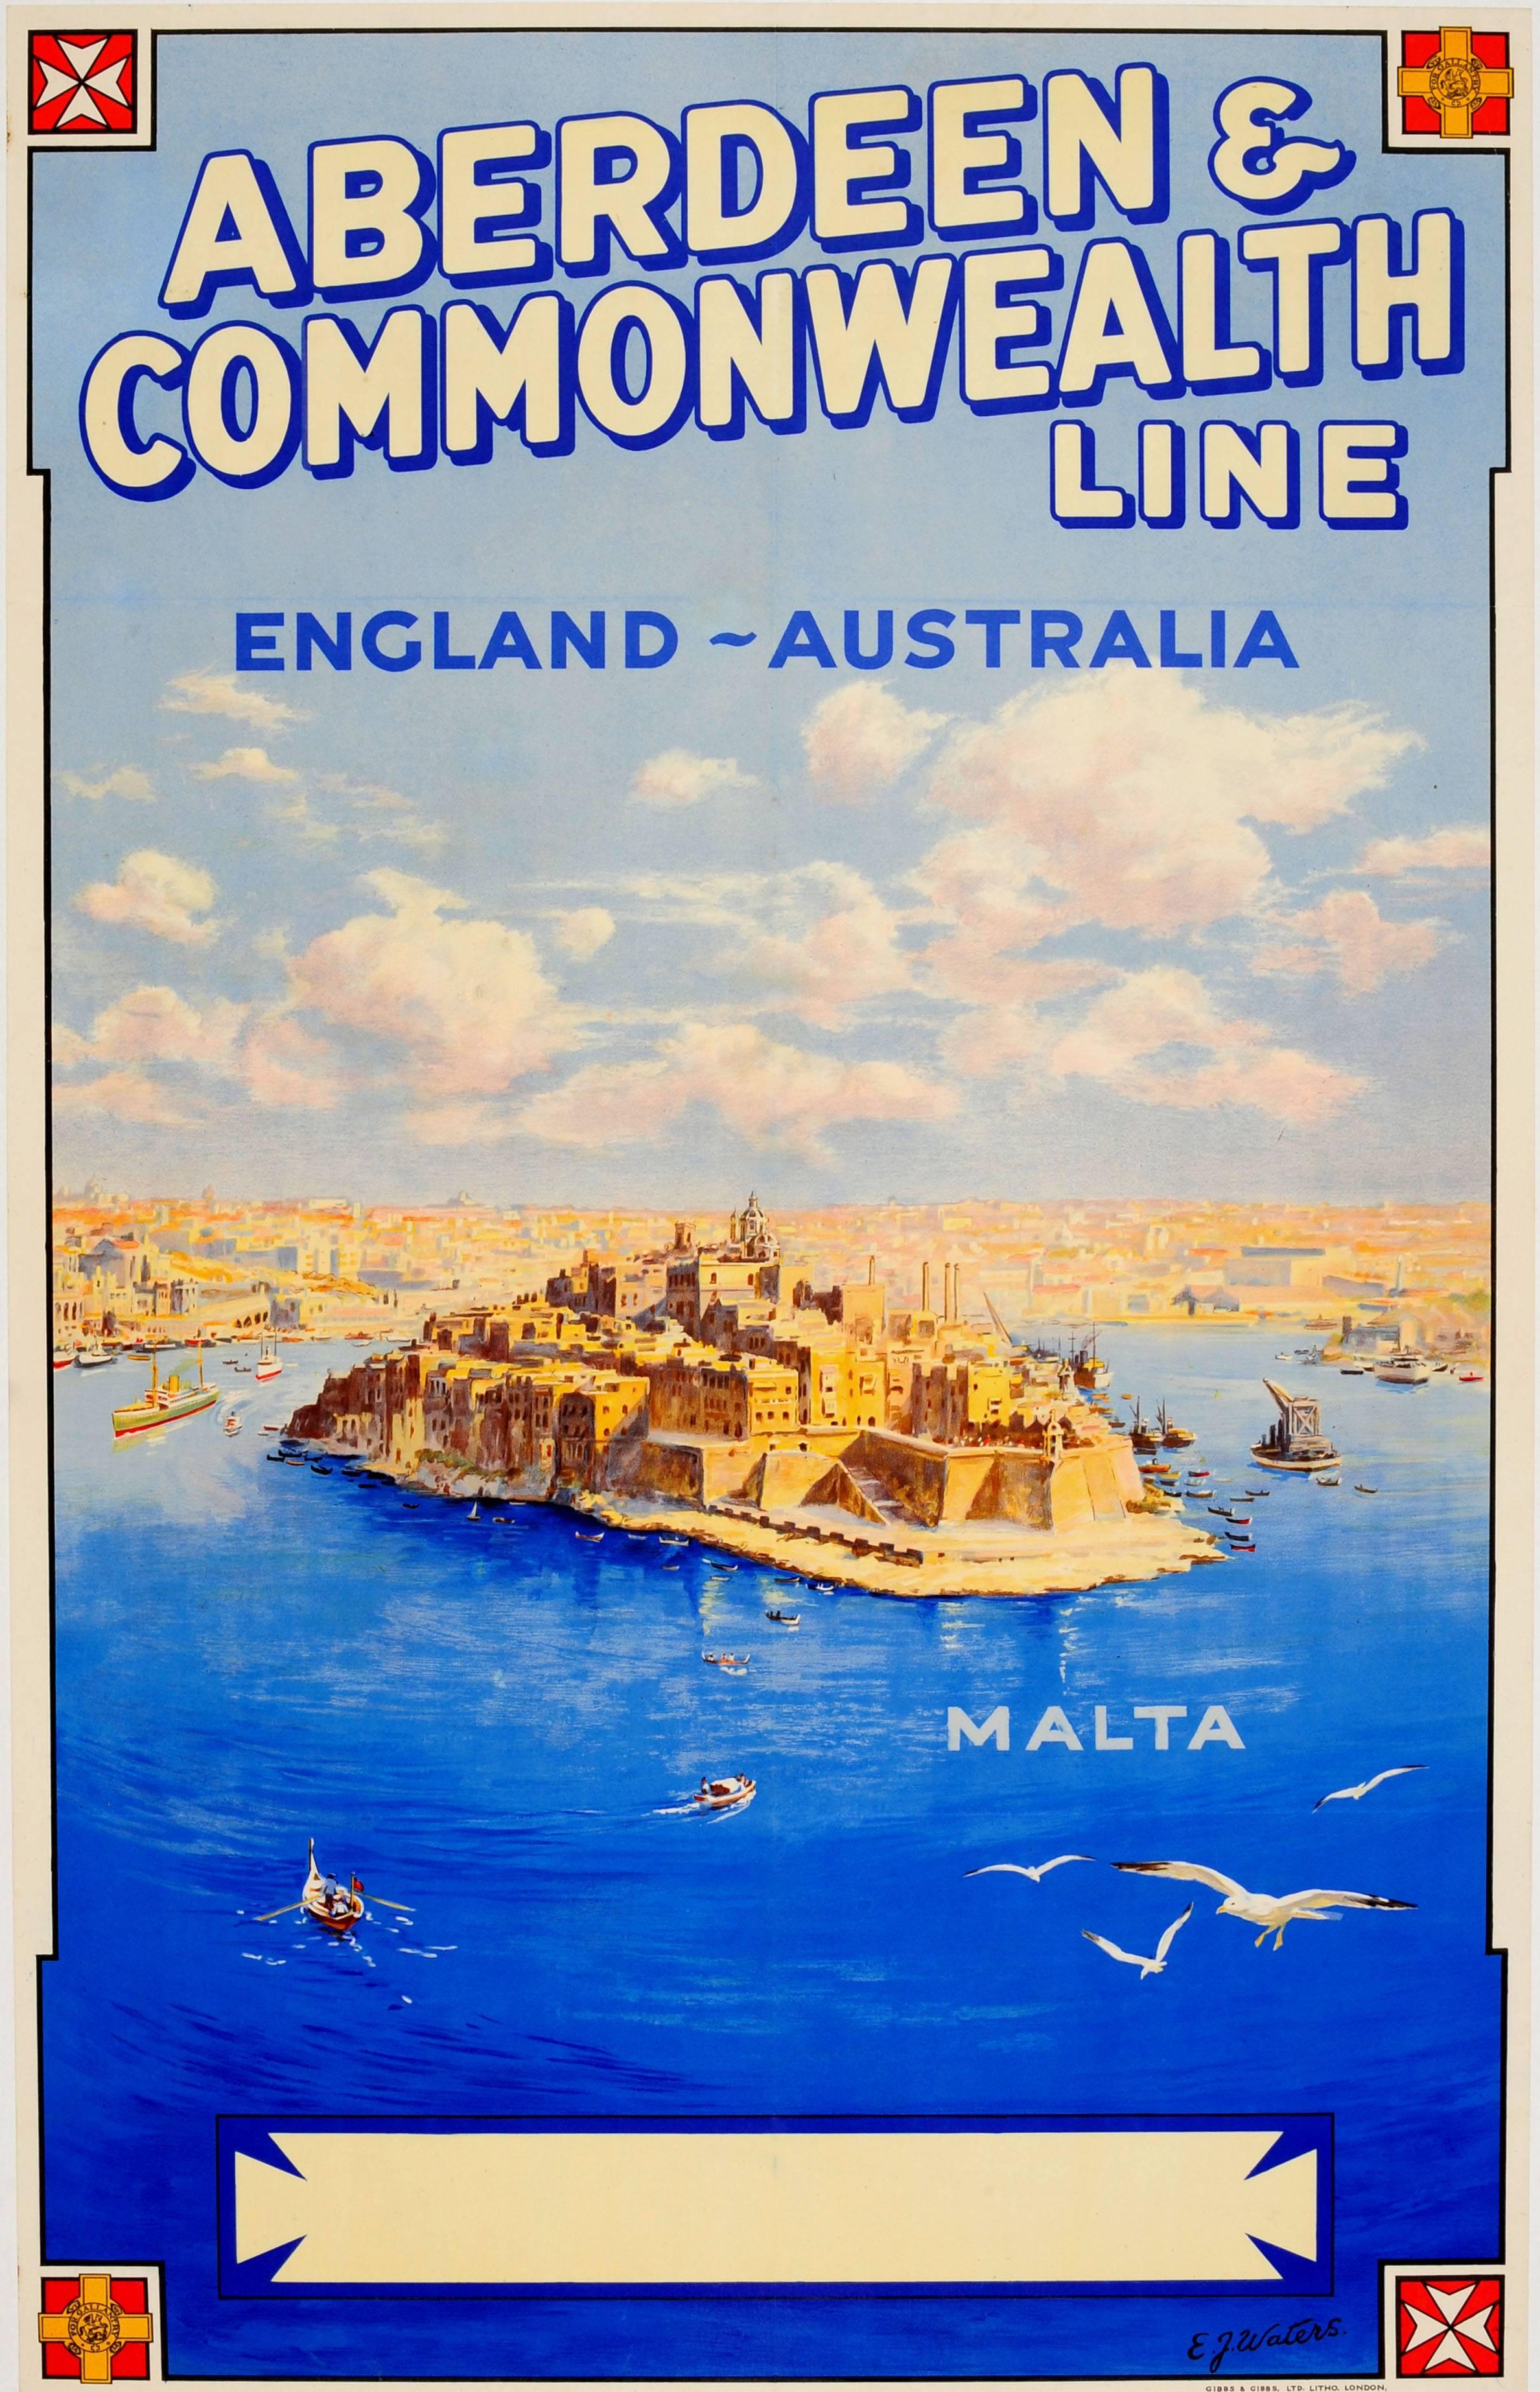 E.J. Waters Print - Original Vintage Aberdeen & Commonwealth Line England Australia Poster Ft. Malta